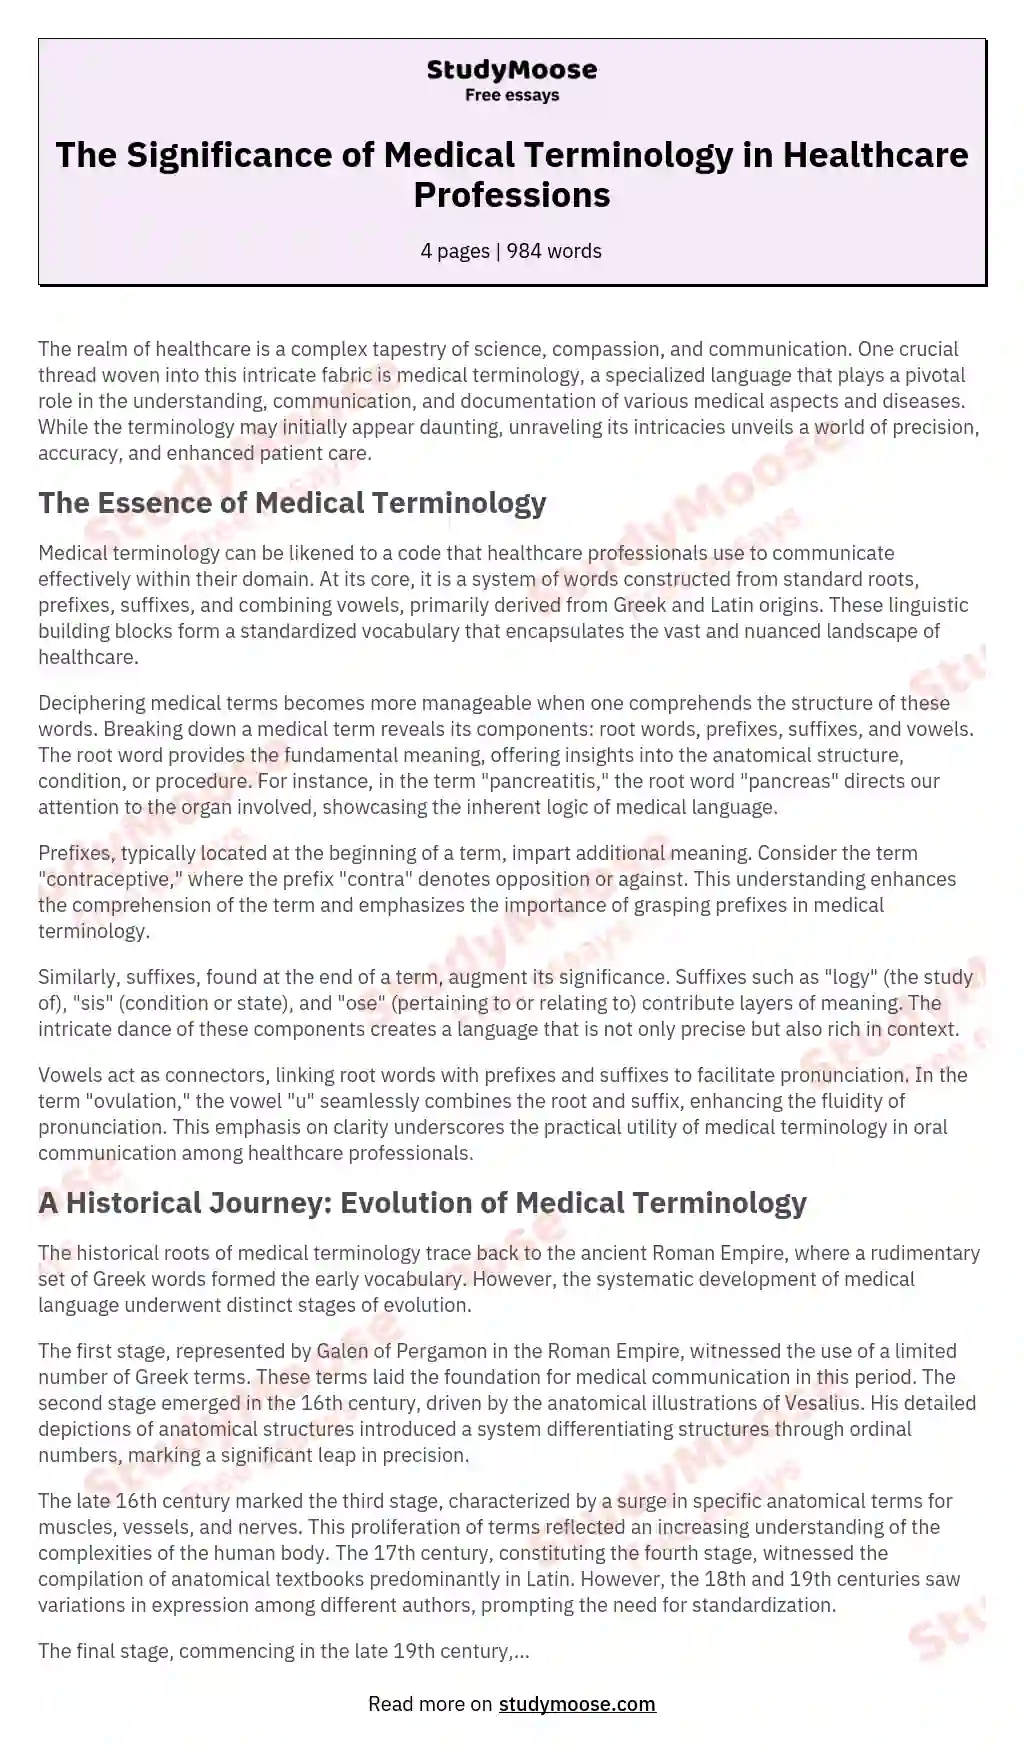 The Origin of Medical Terminology